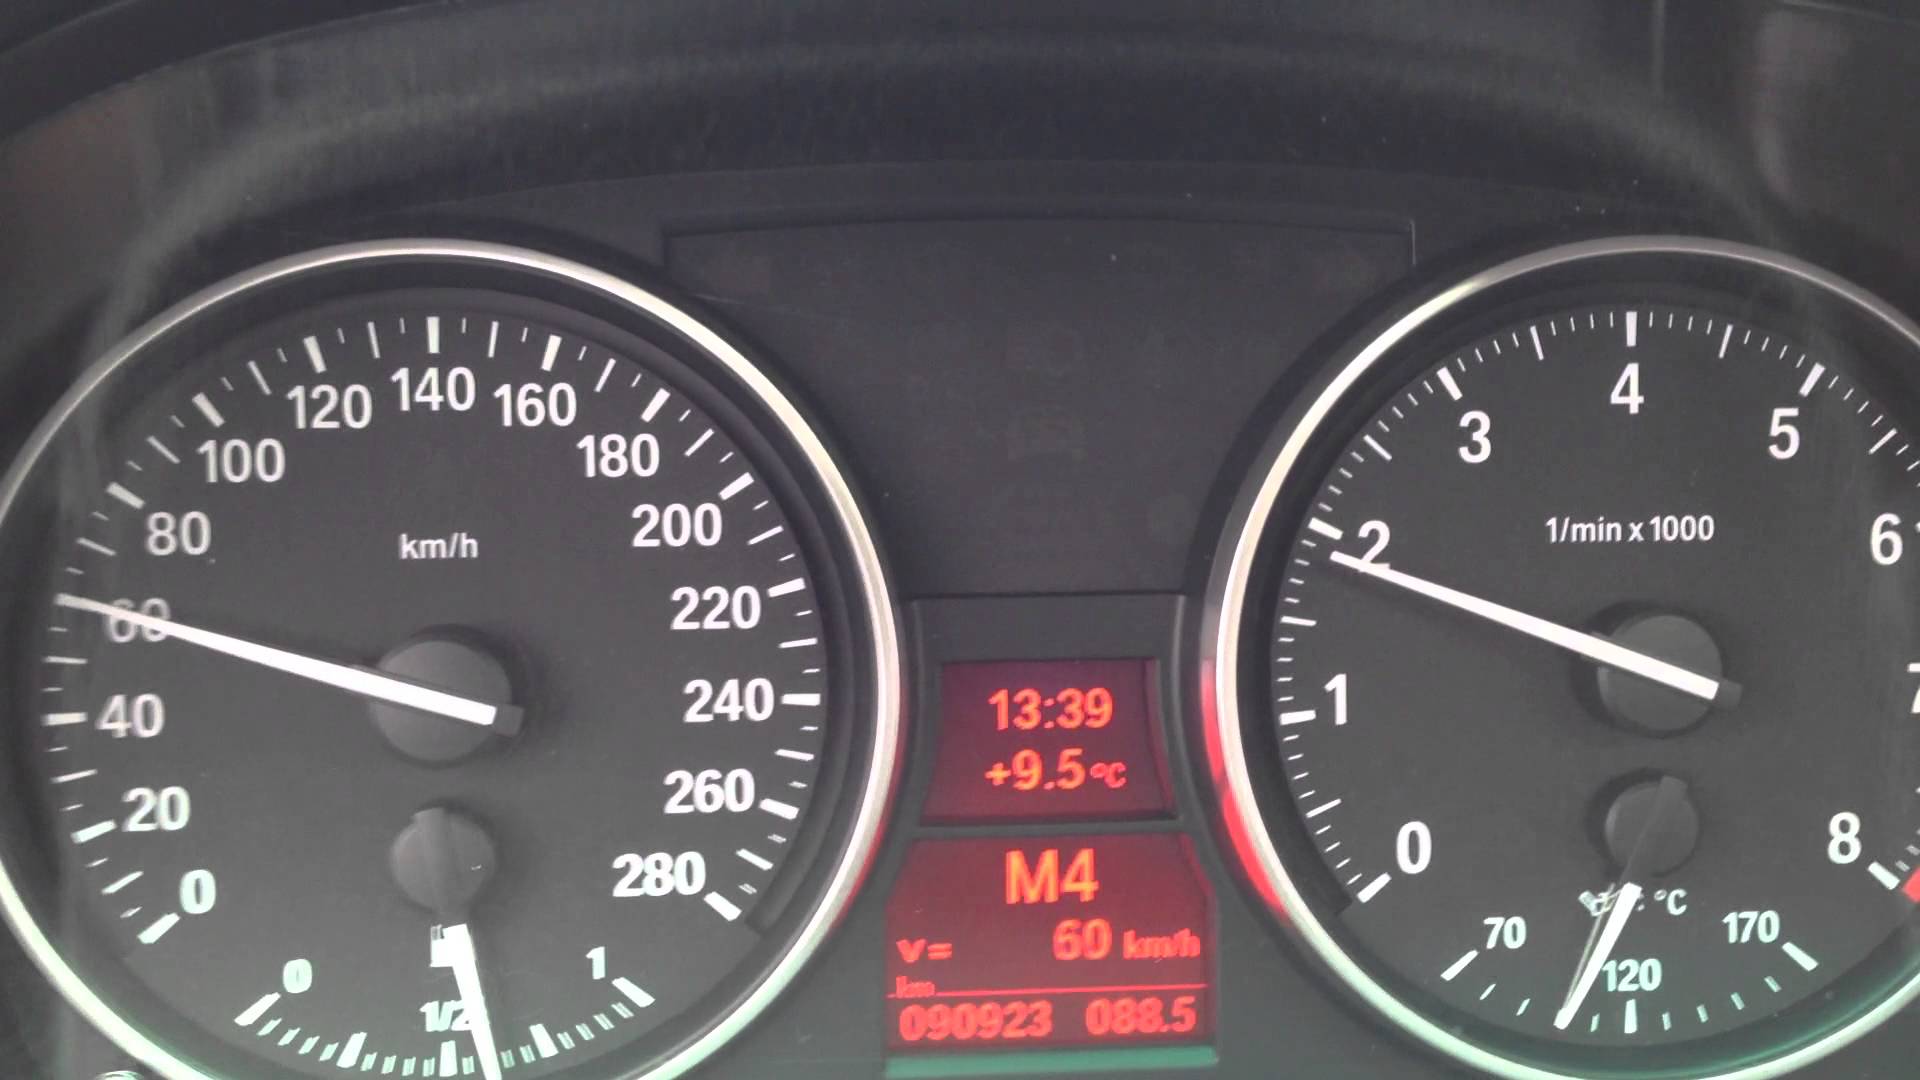 BMW N54 335i Digital Speedometer (M3 Style)